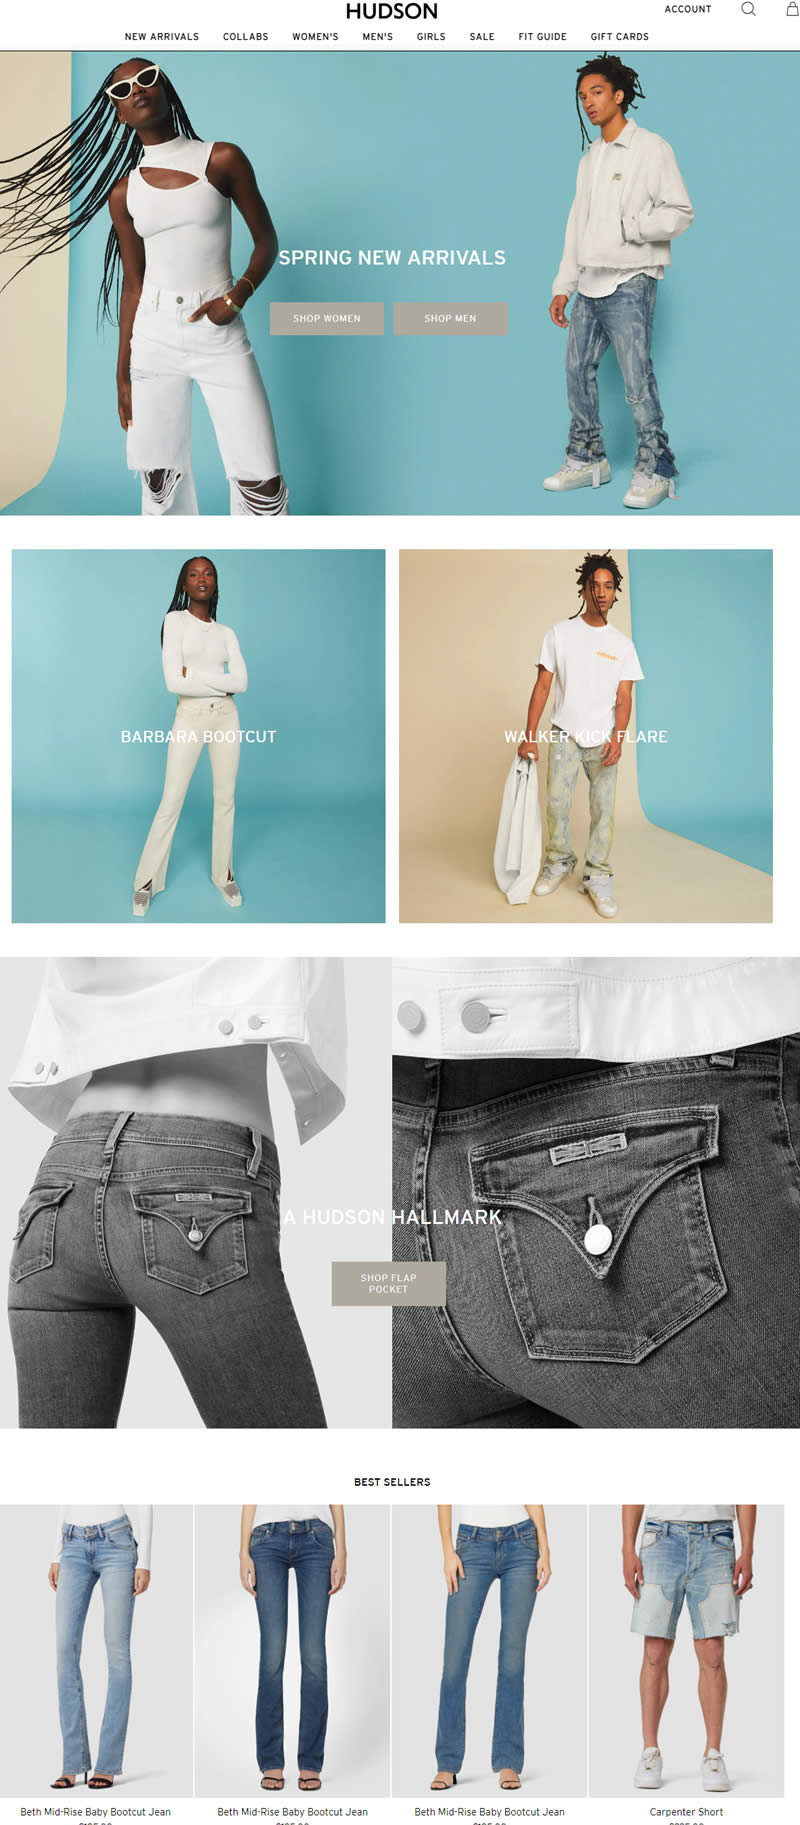 Hudson Jeans高端牛仔时装美国官网首页